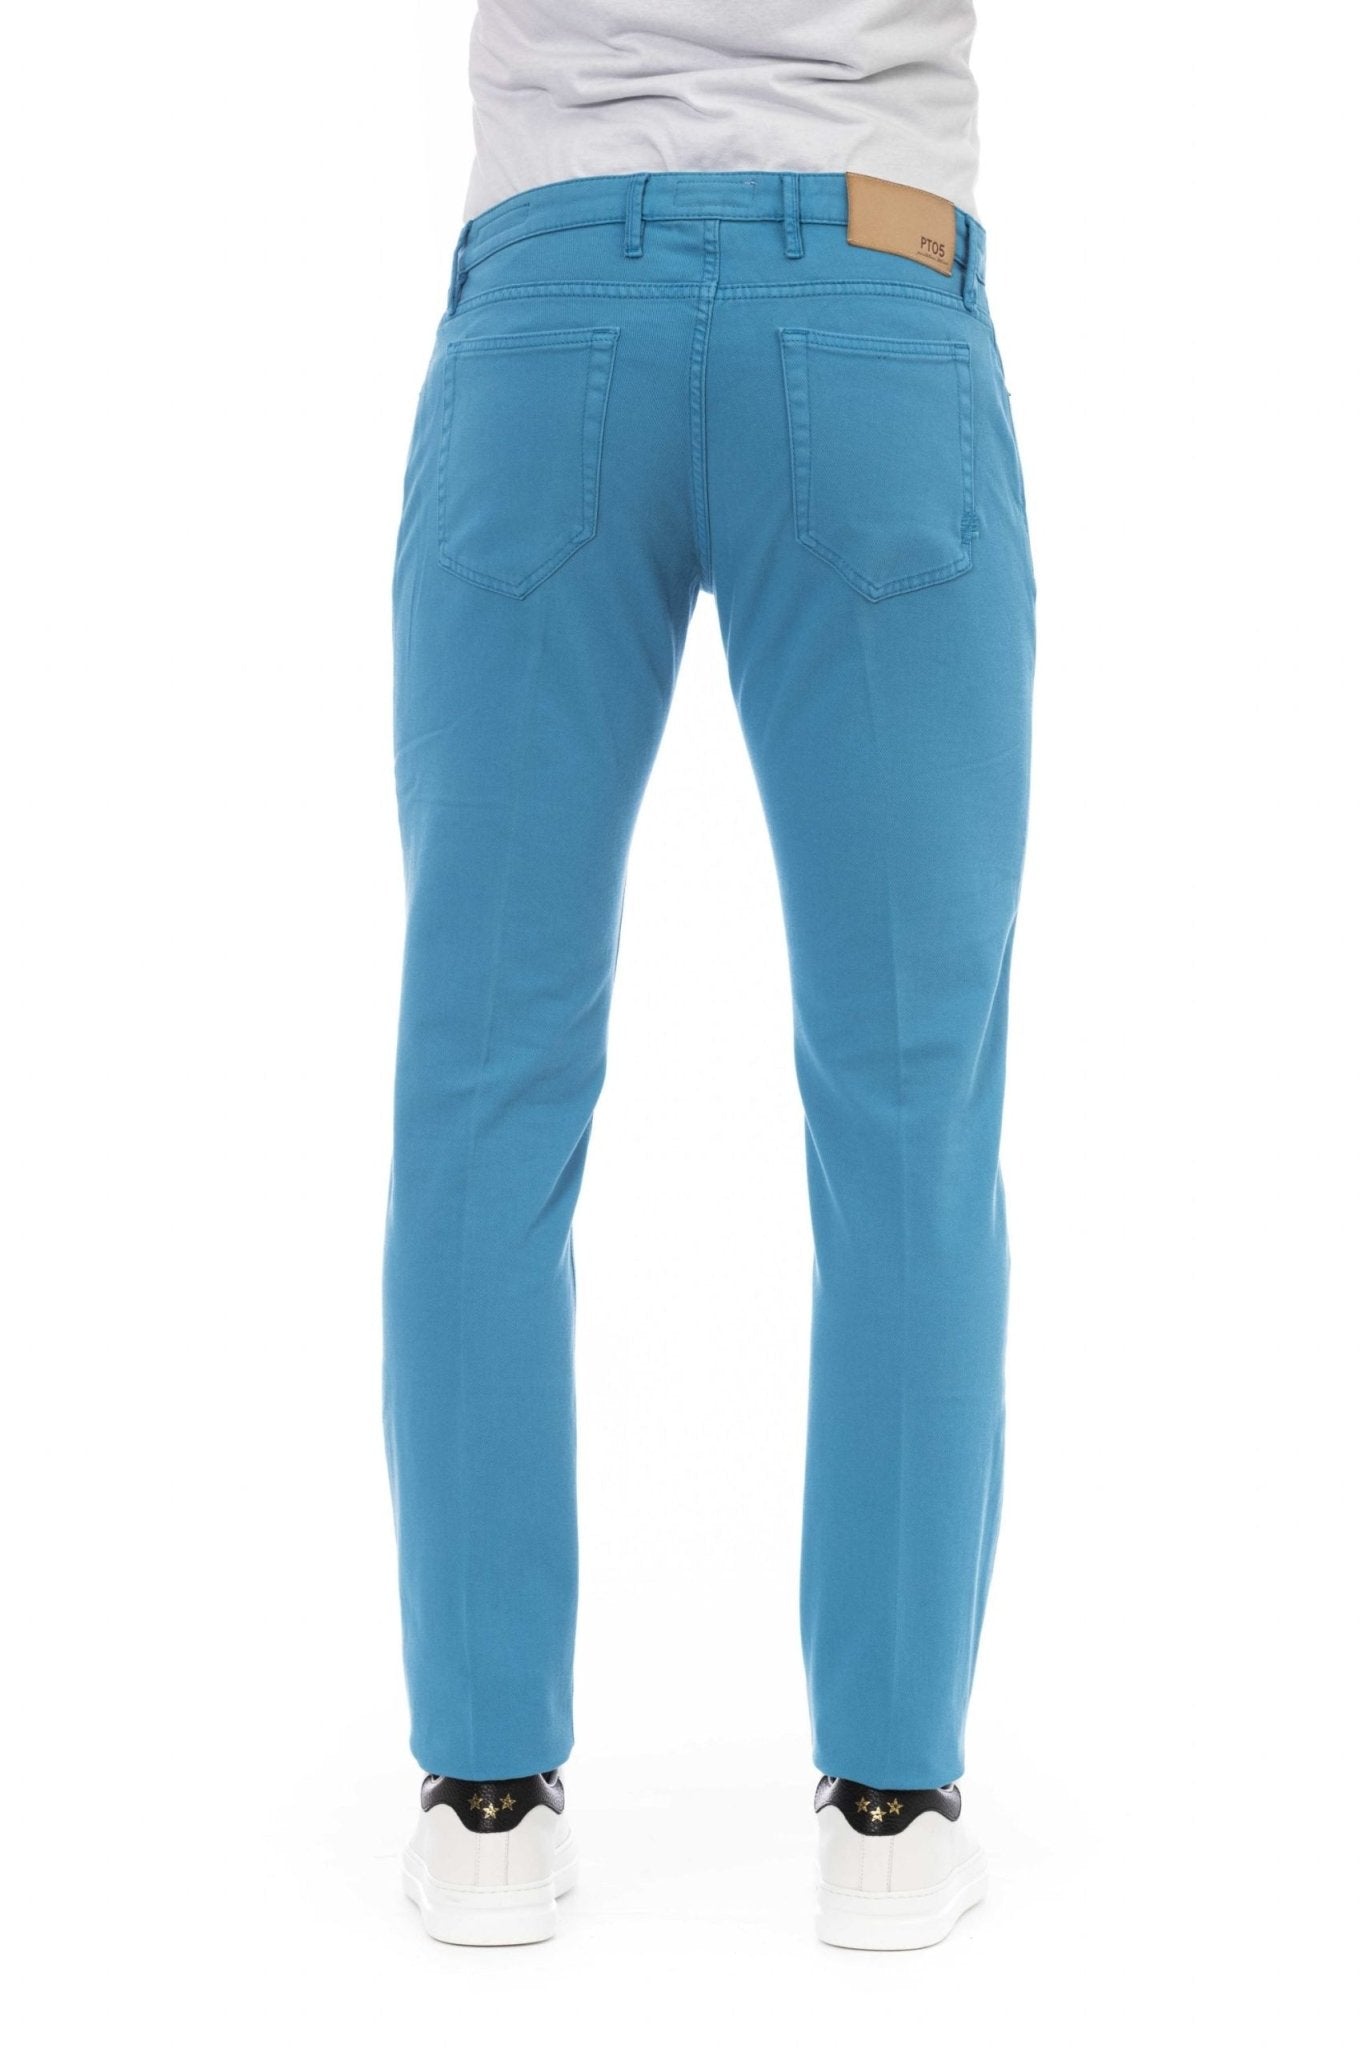 PT Torino Light-blue Cotton Jeans & Pant - Fizigo